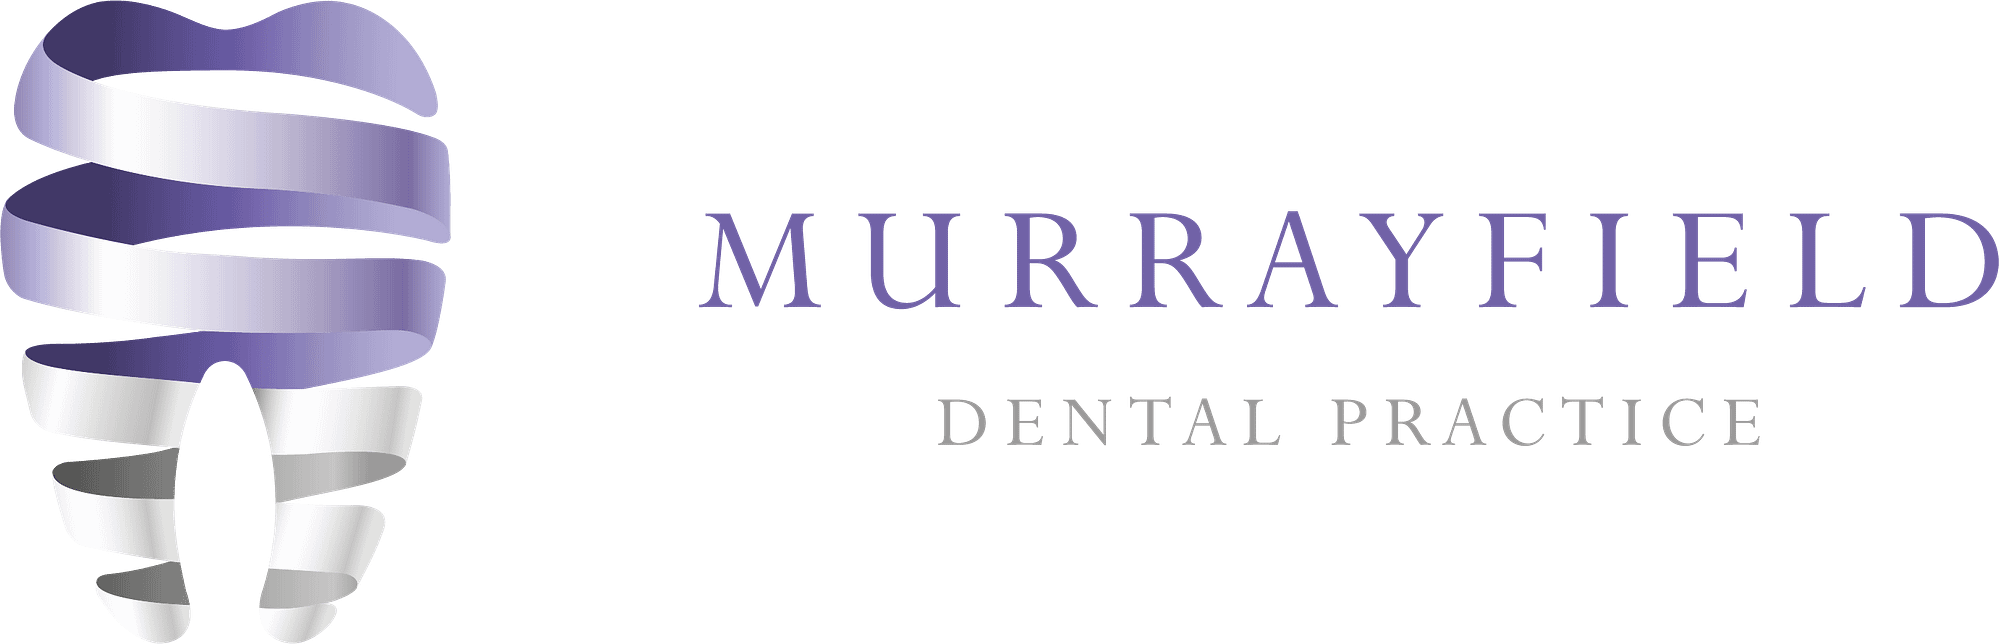 Murrayfield Dental Practice